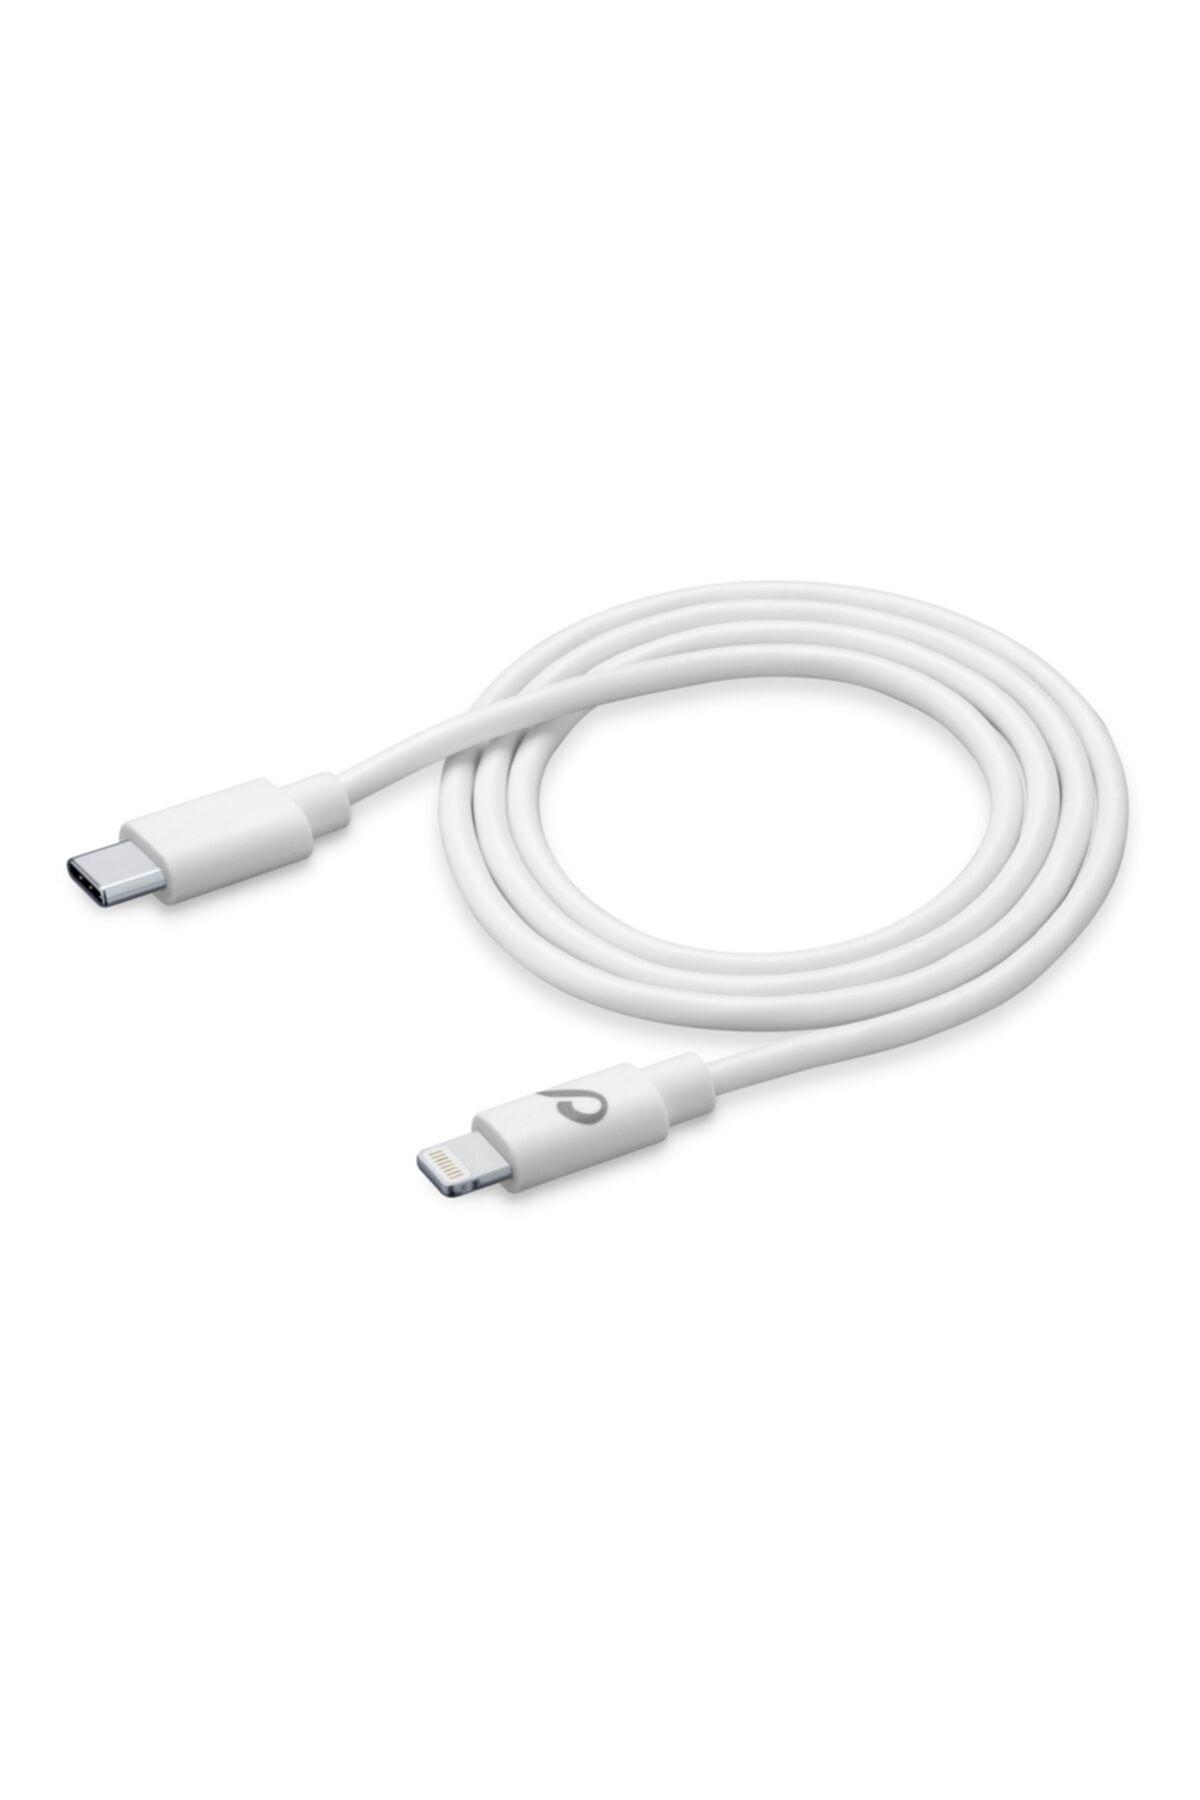 Cellular Line Cellularlıne Usb C Apple Lıghtnıng Kablo 120 cm Beyaz